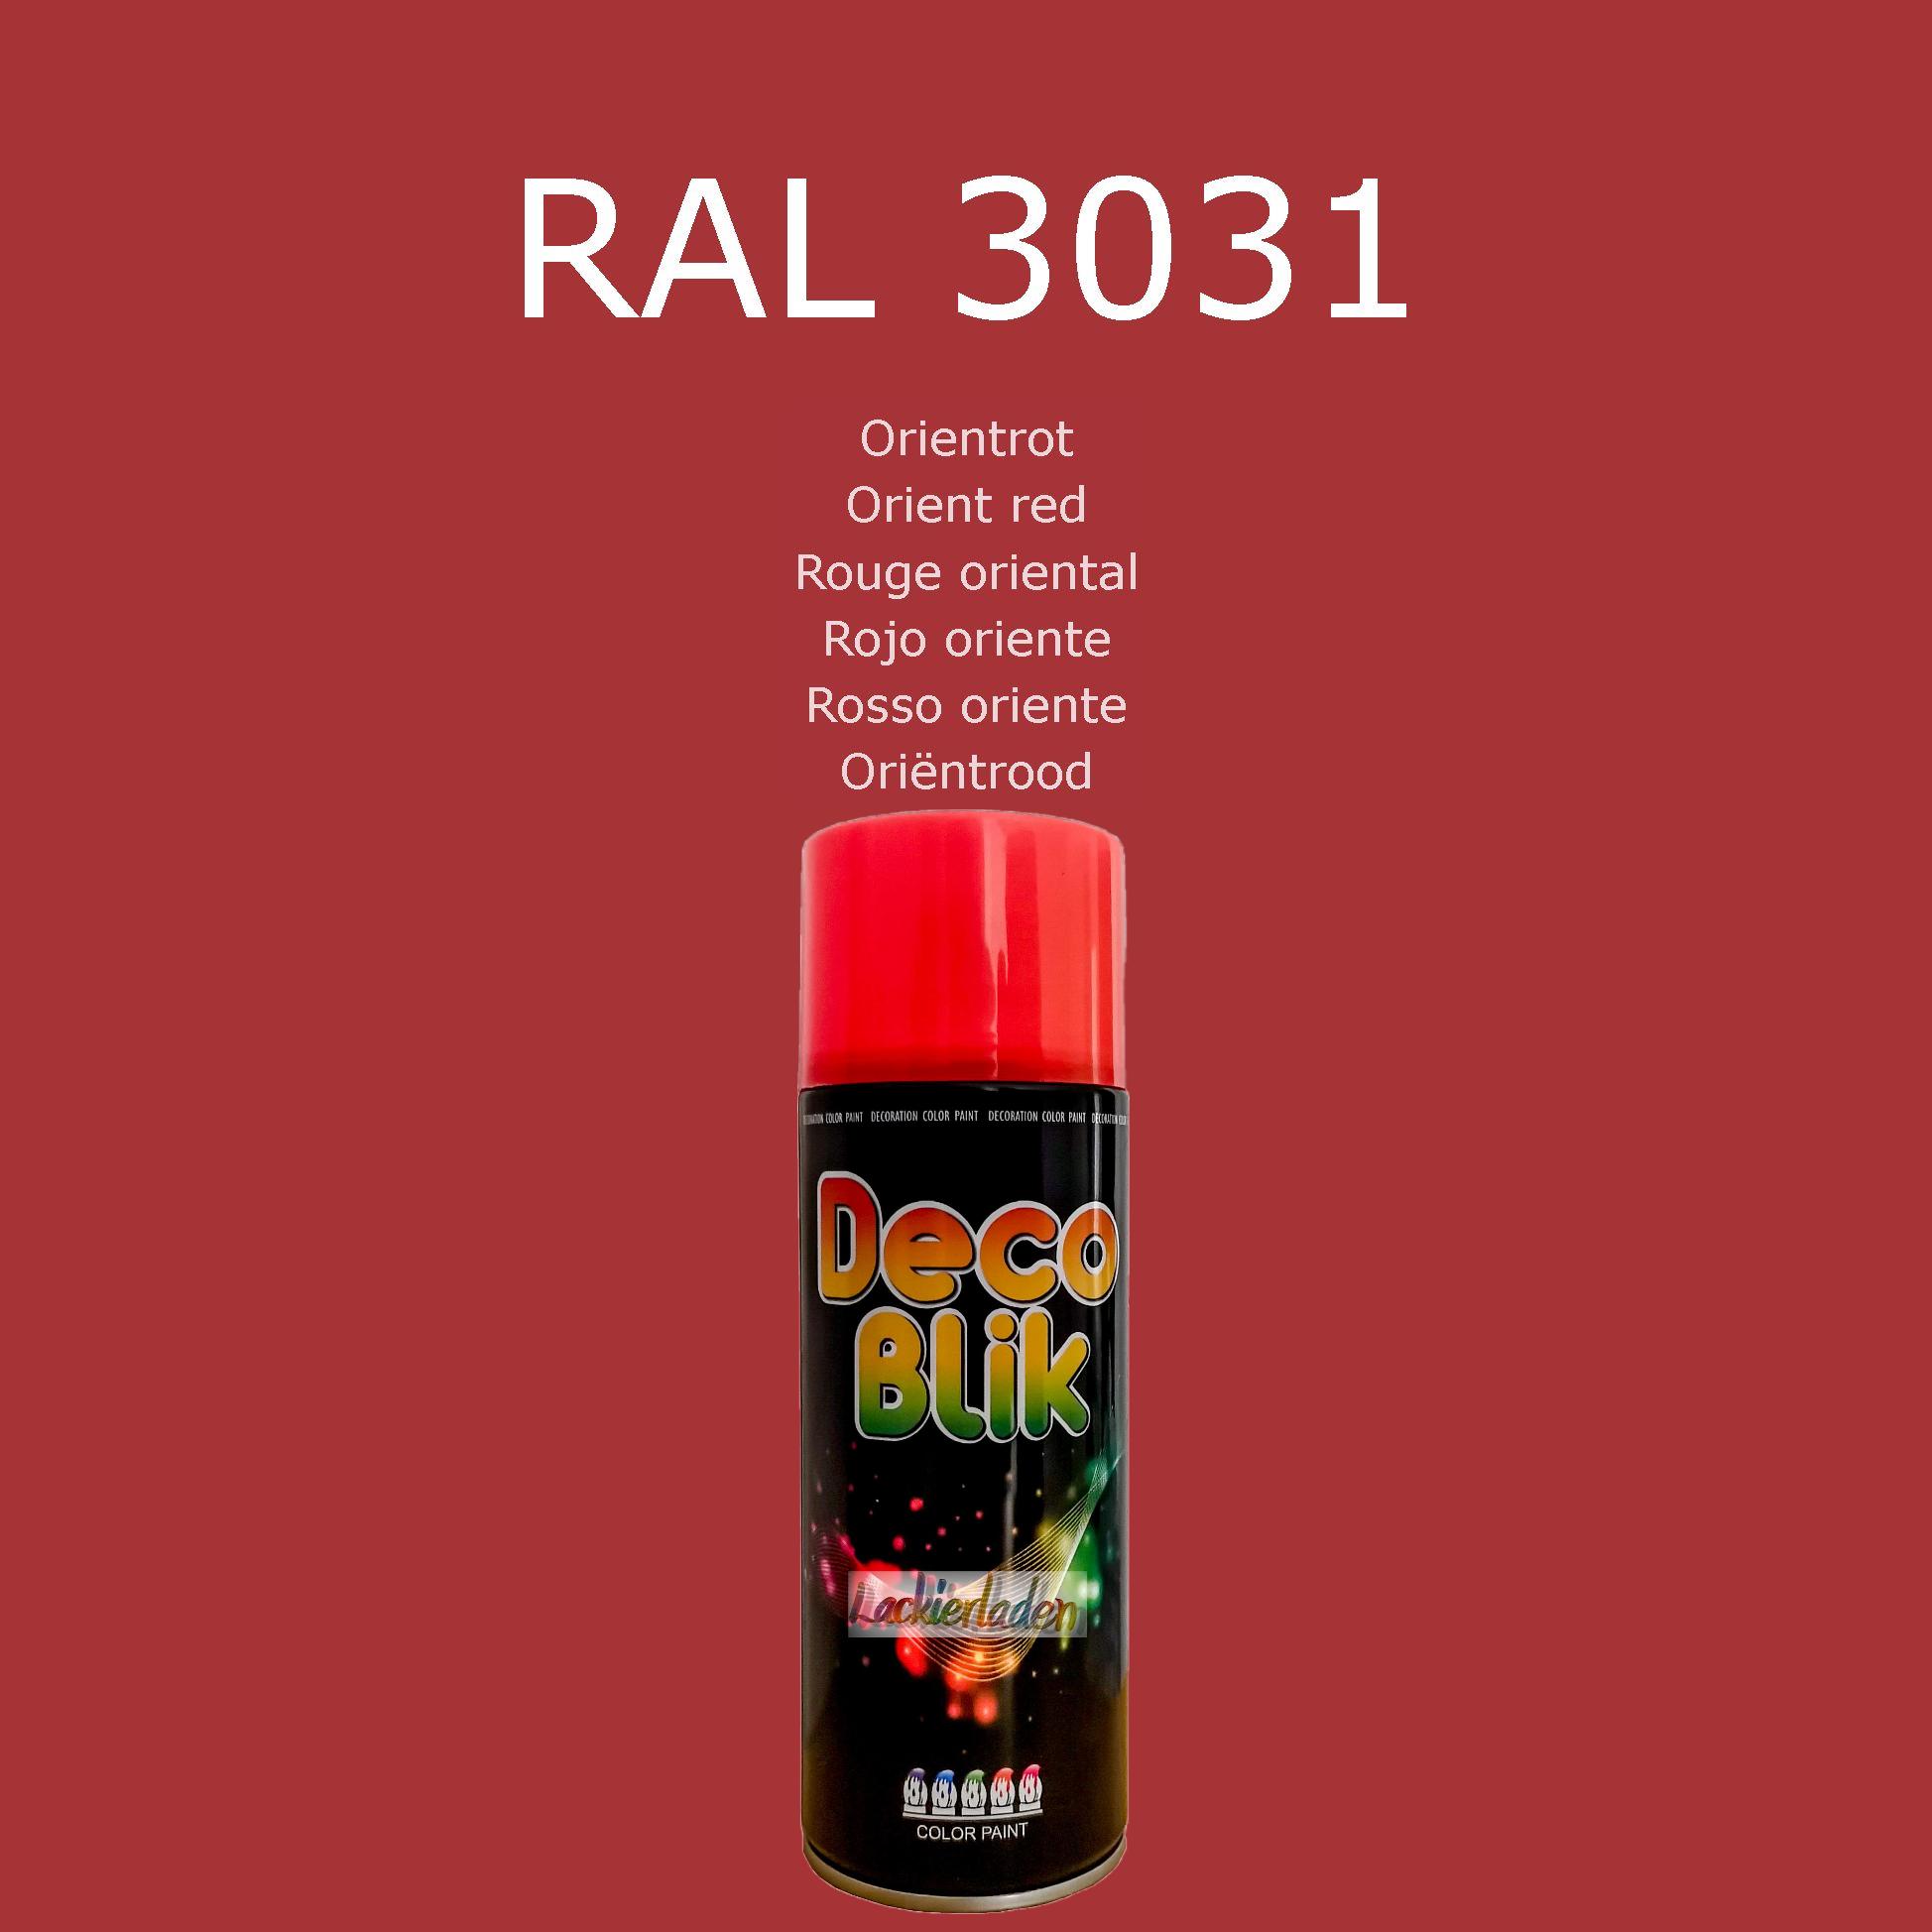 Zollex Decolack Spraydose 400 ml RAL 3031 Orientrot Orient red Rouge oriental Rojo oriente Rosso oriente Oriëntrood | Dekolack Lackspray Sprüh Dose